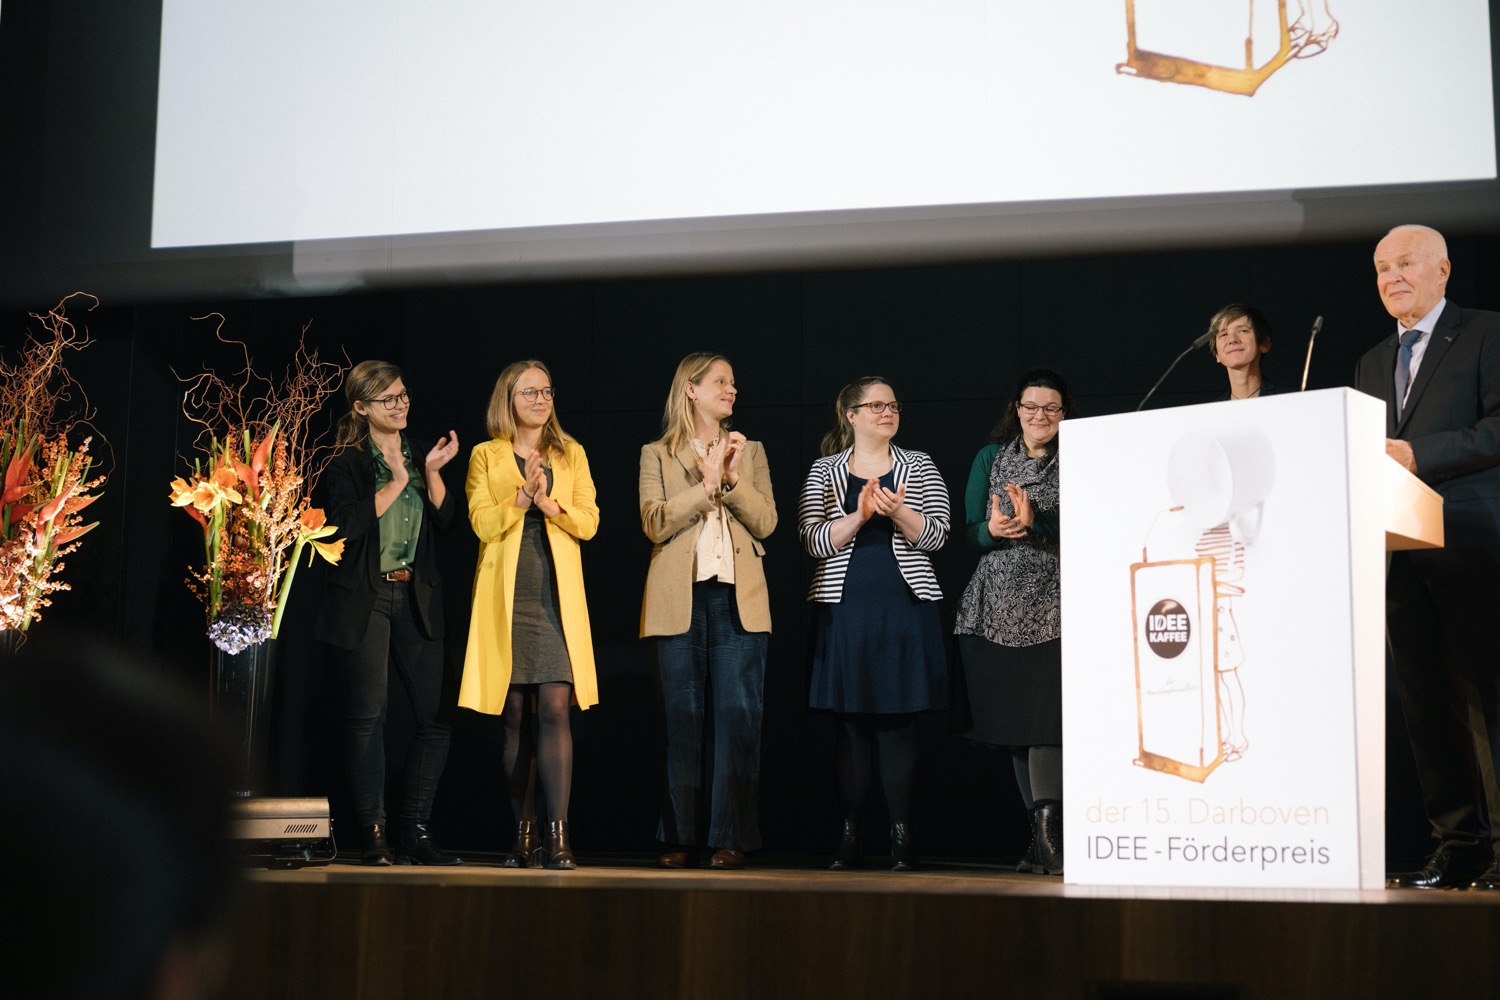 Award ceremony for the 15th Darboven IDEE Sponsorship Prize in Hamburg